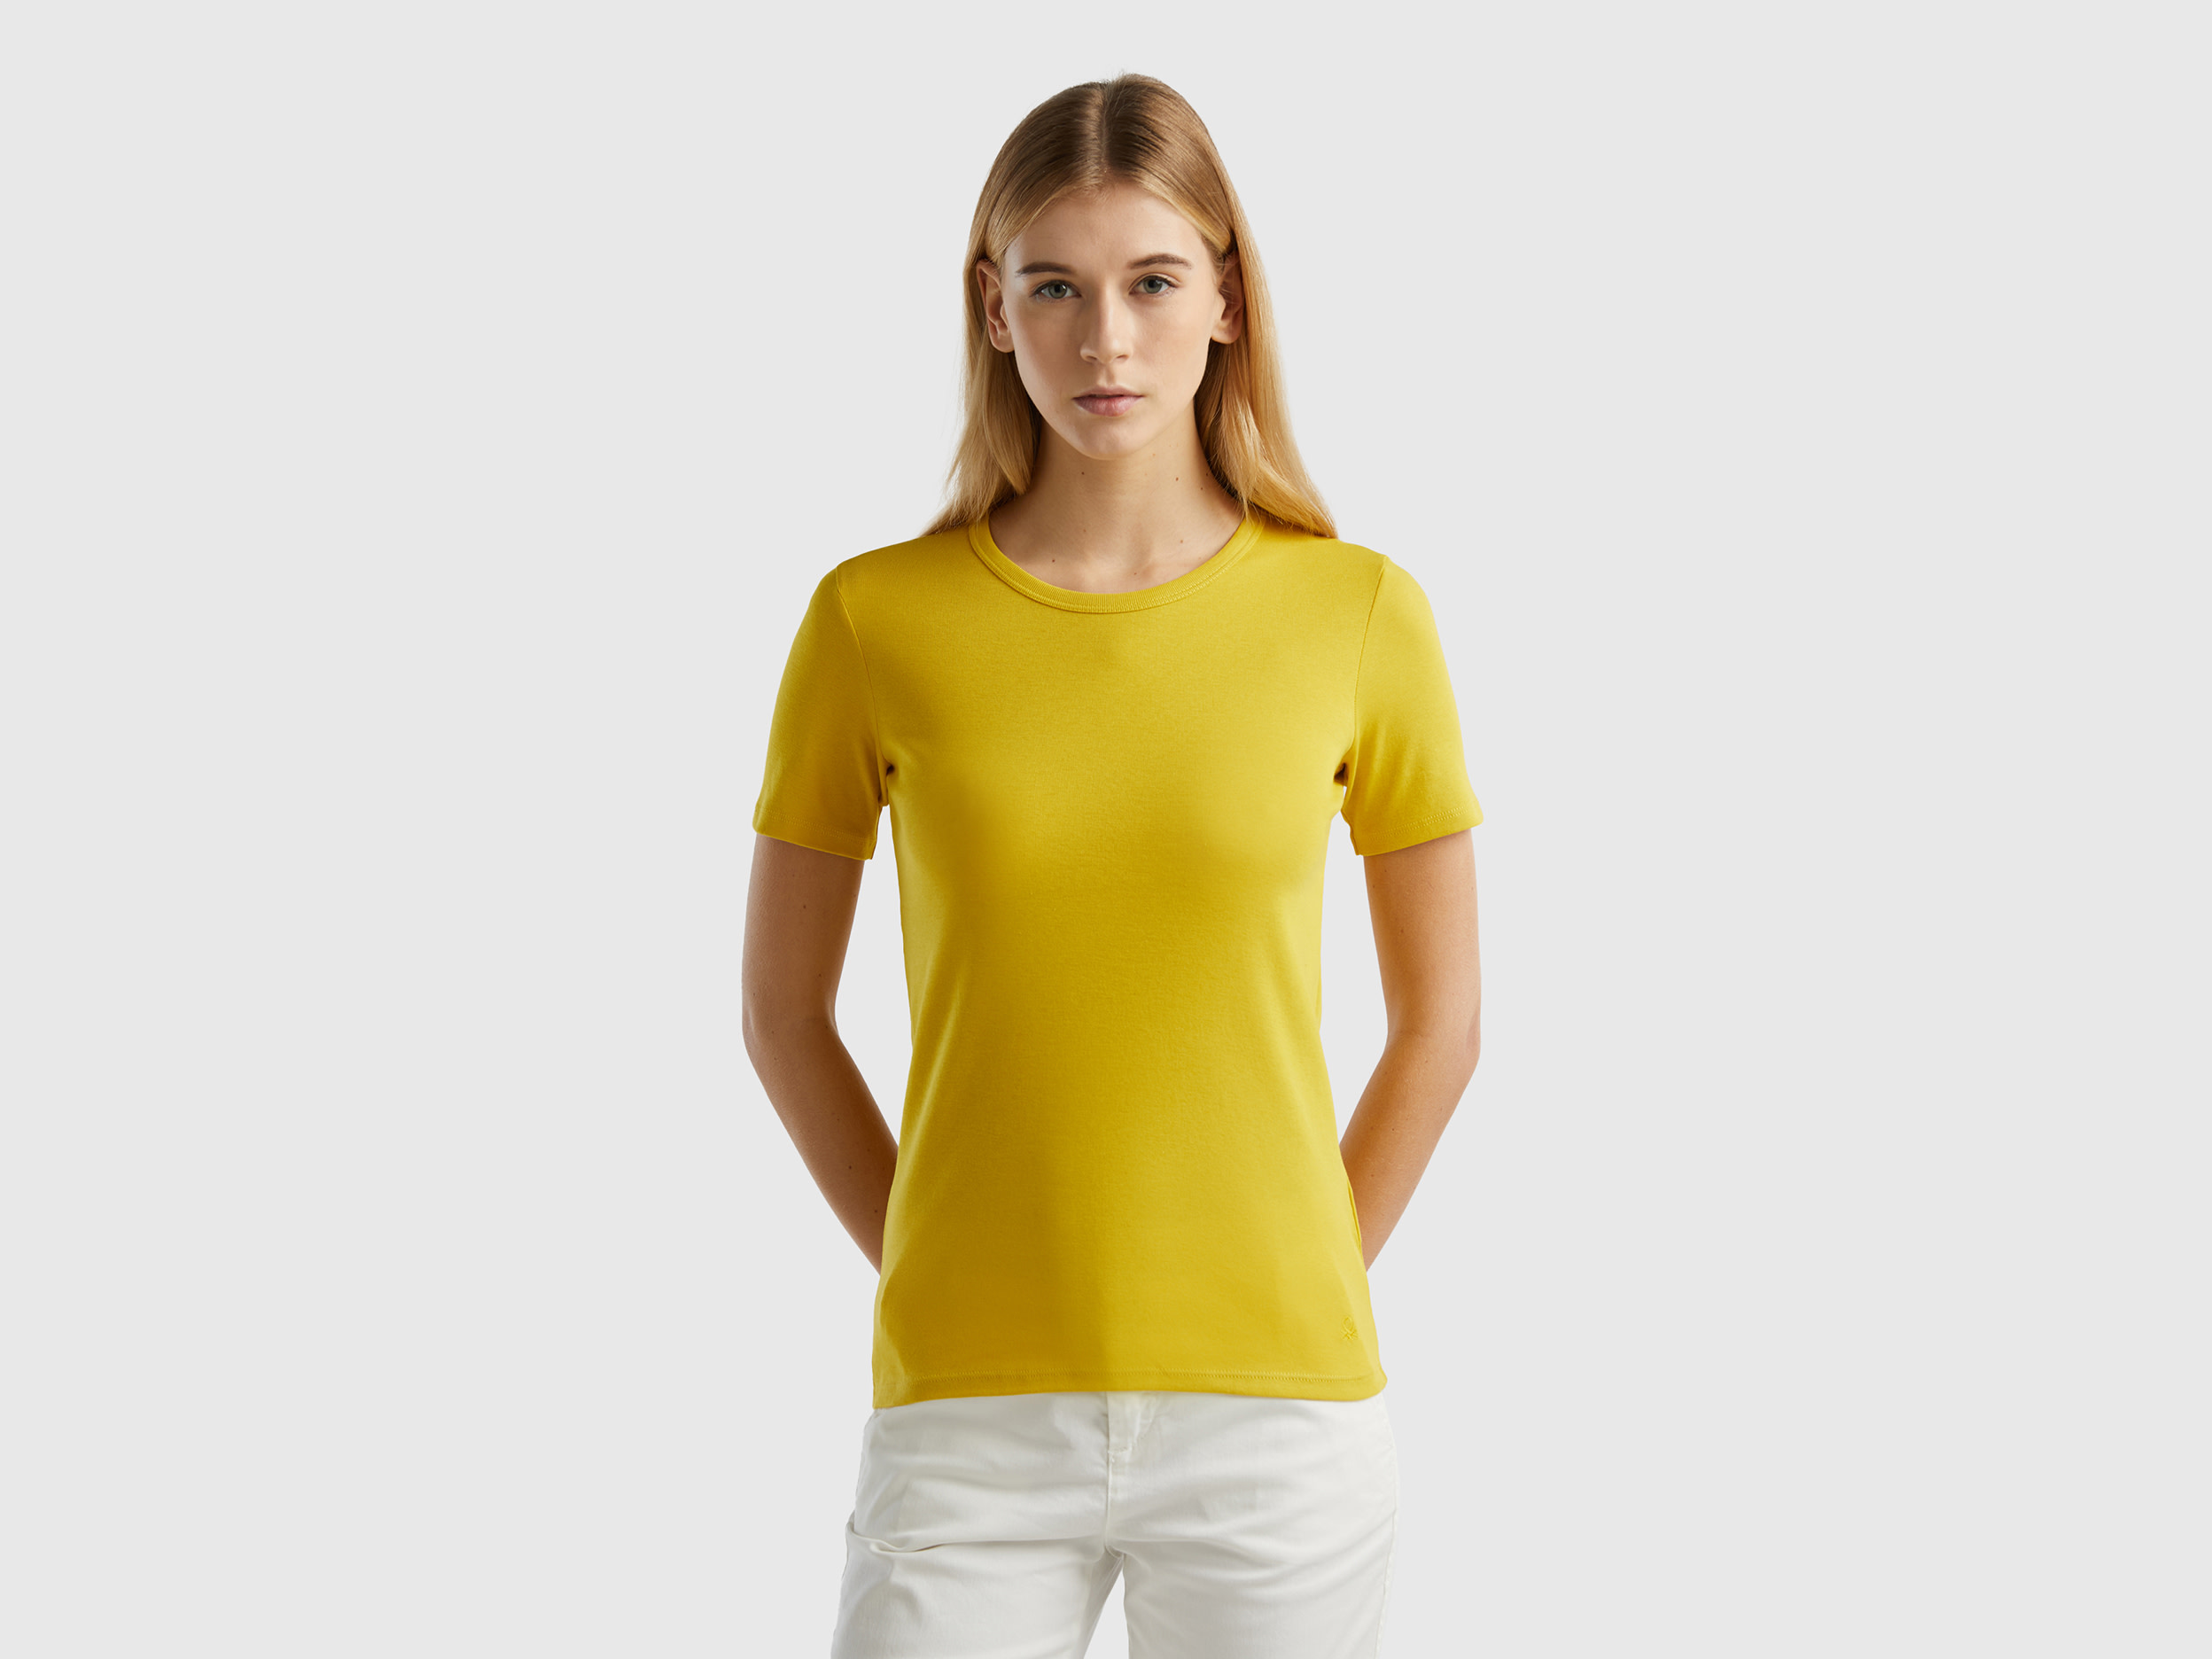 Benetton, Long Fiber Cotton T-shirt, size XL, Yellow, Women